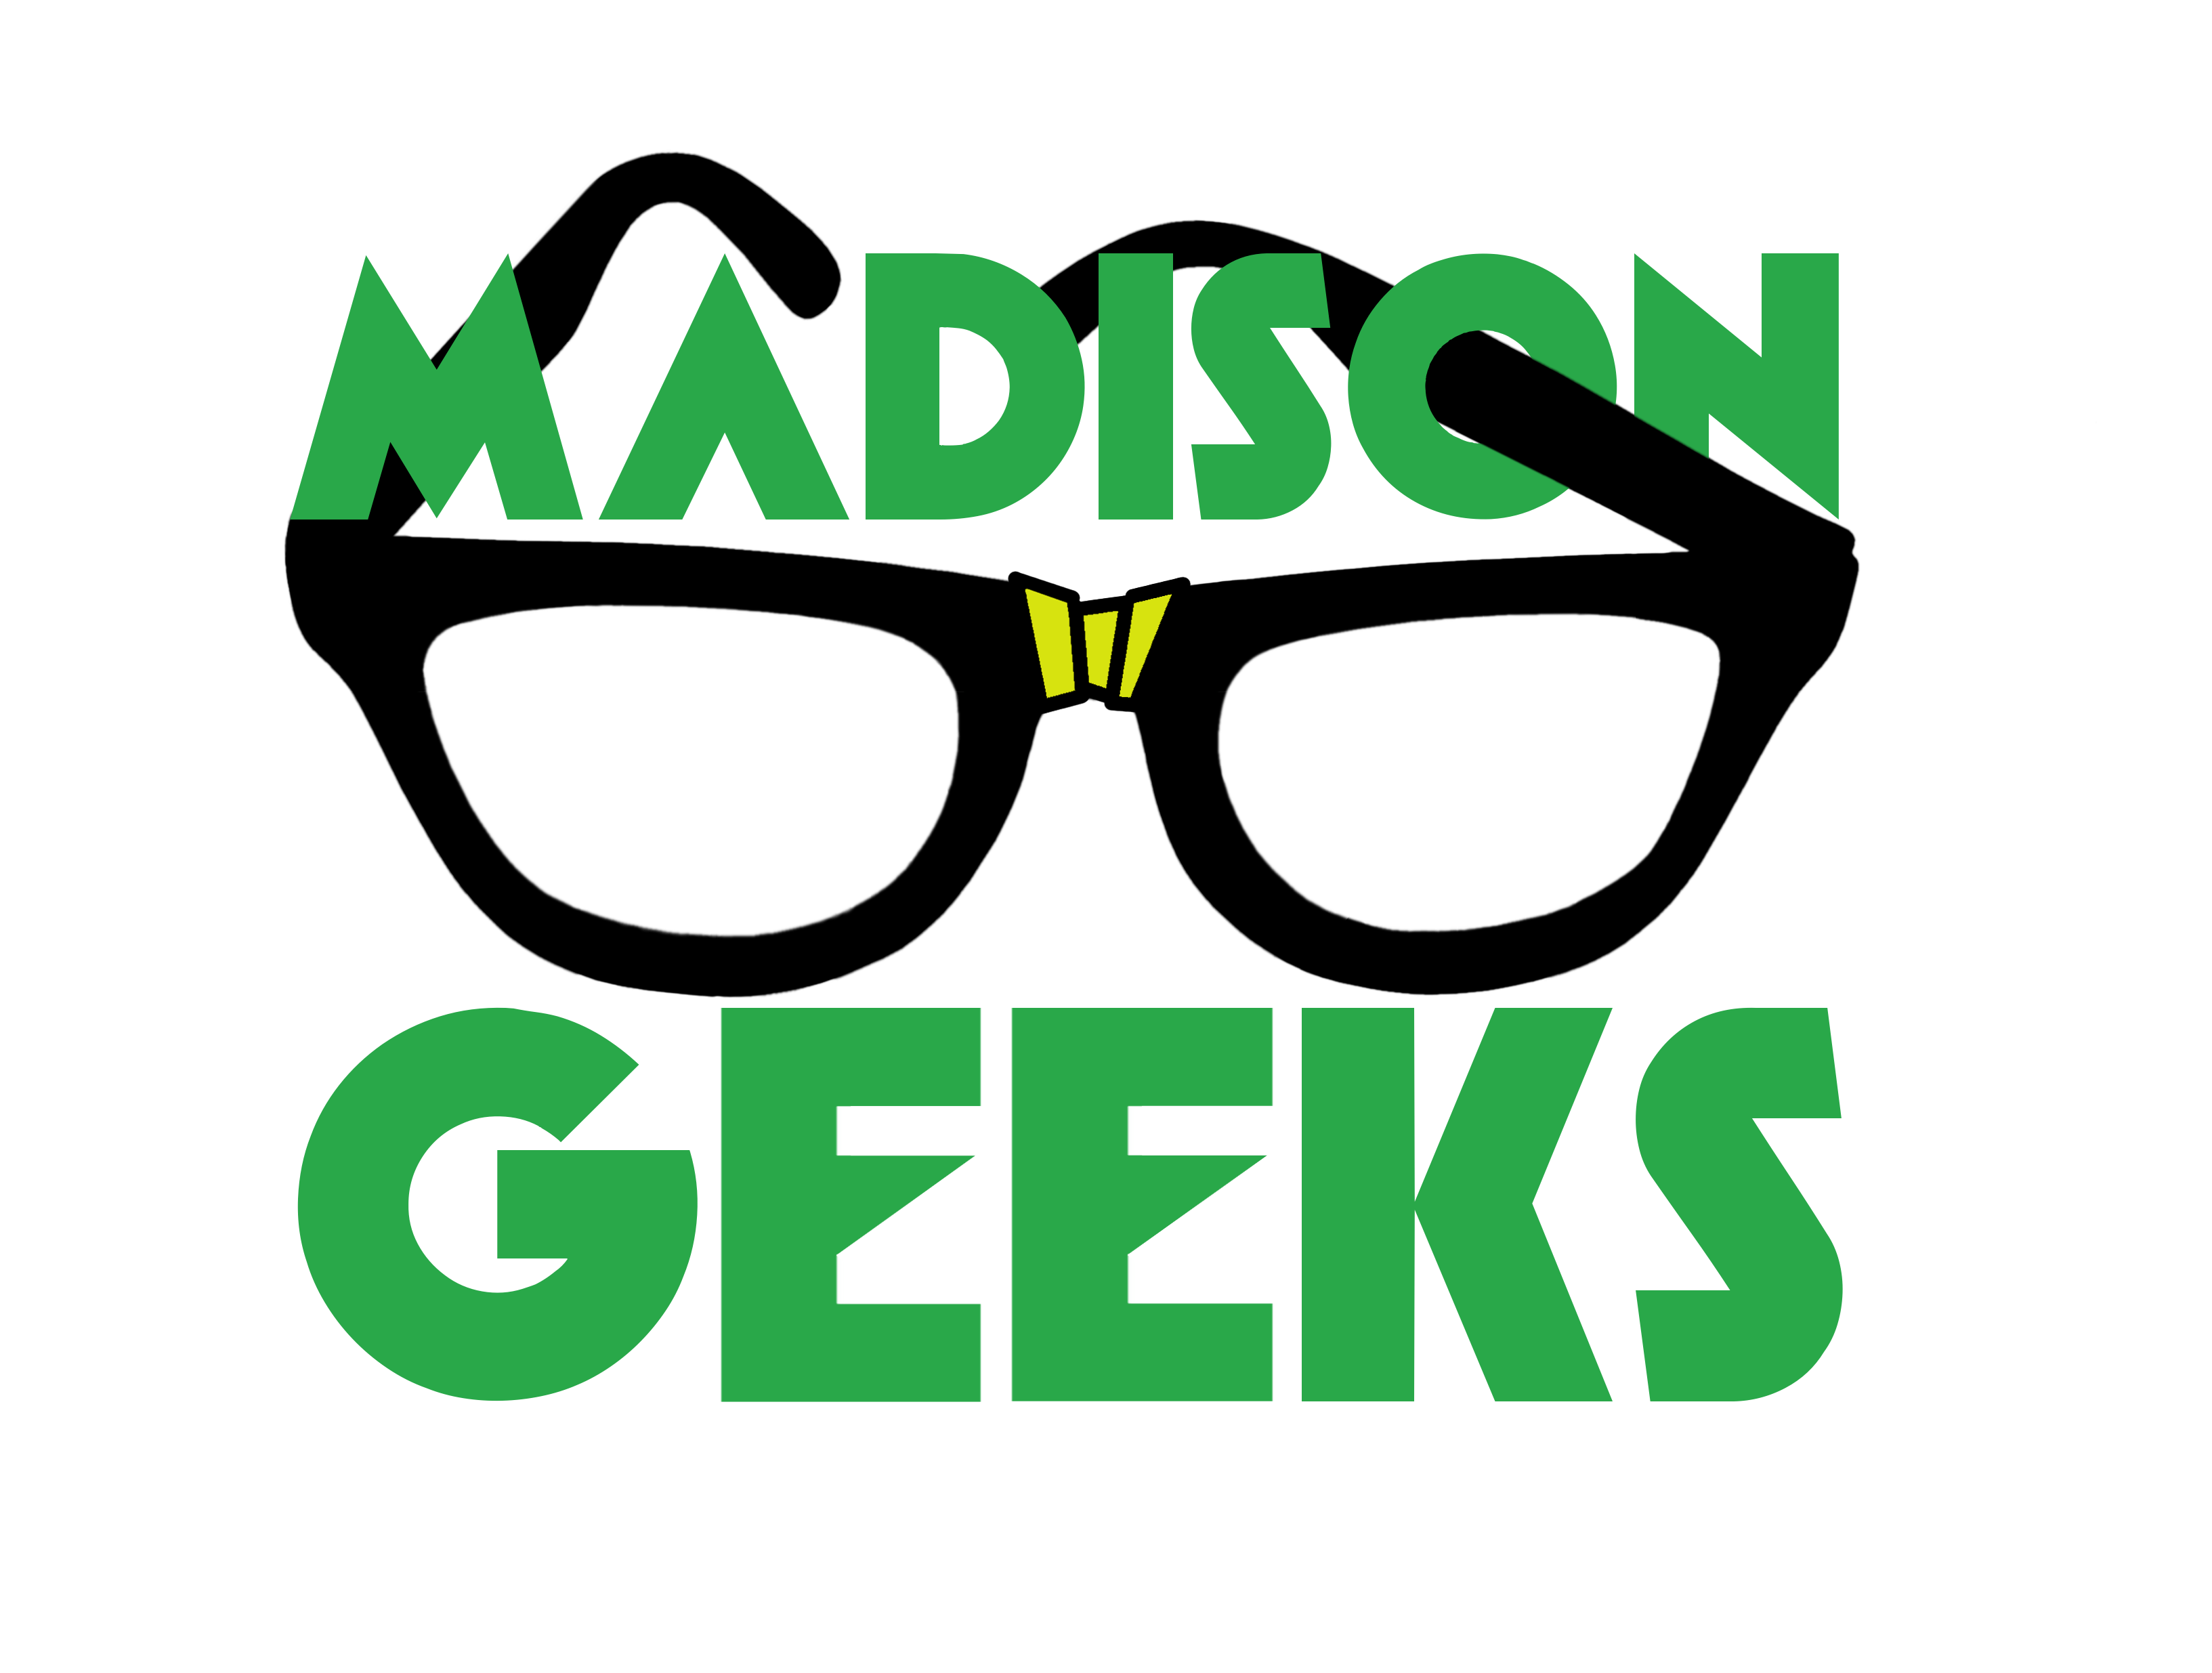 Madison Geeks Group